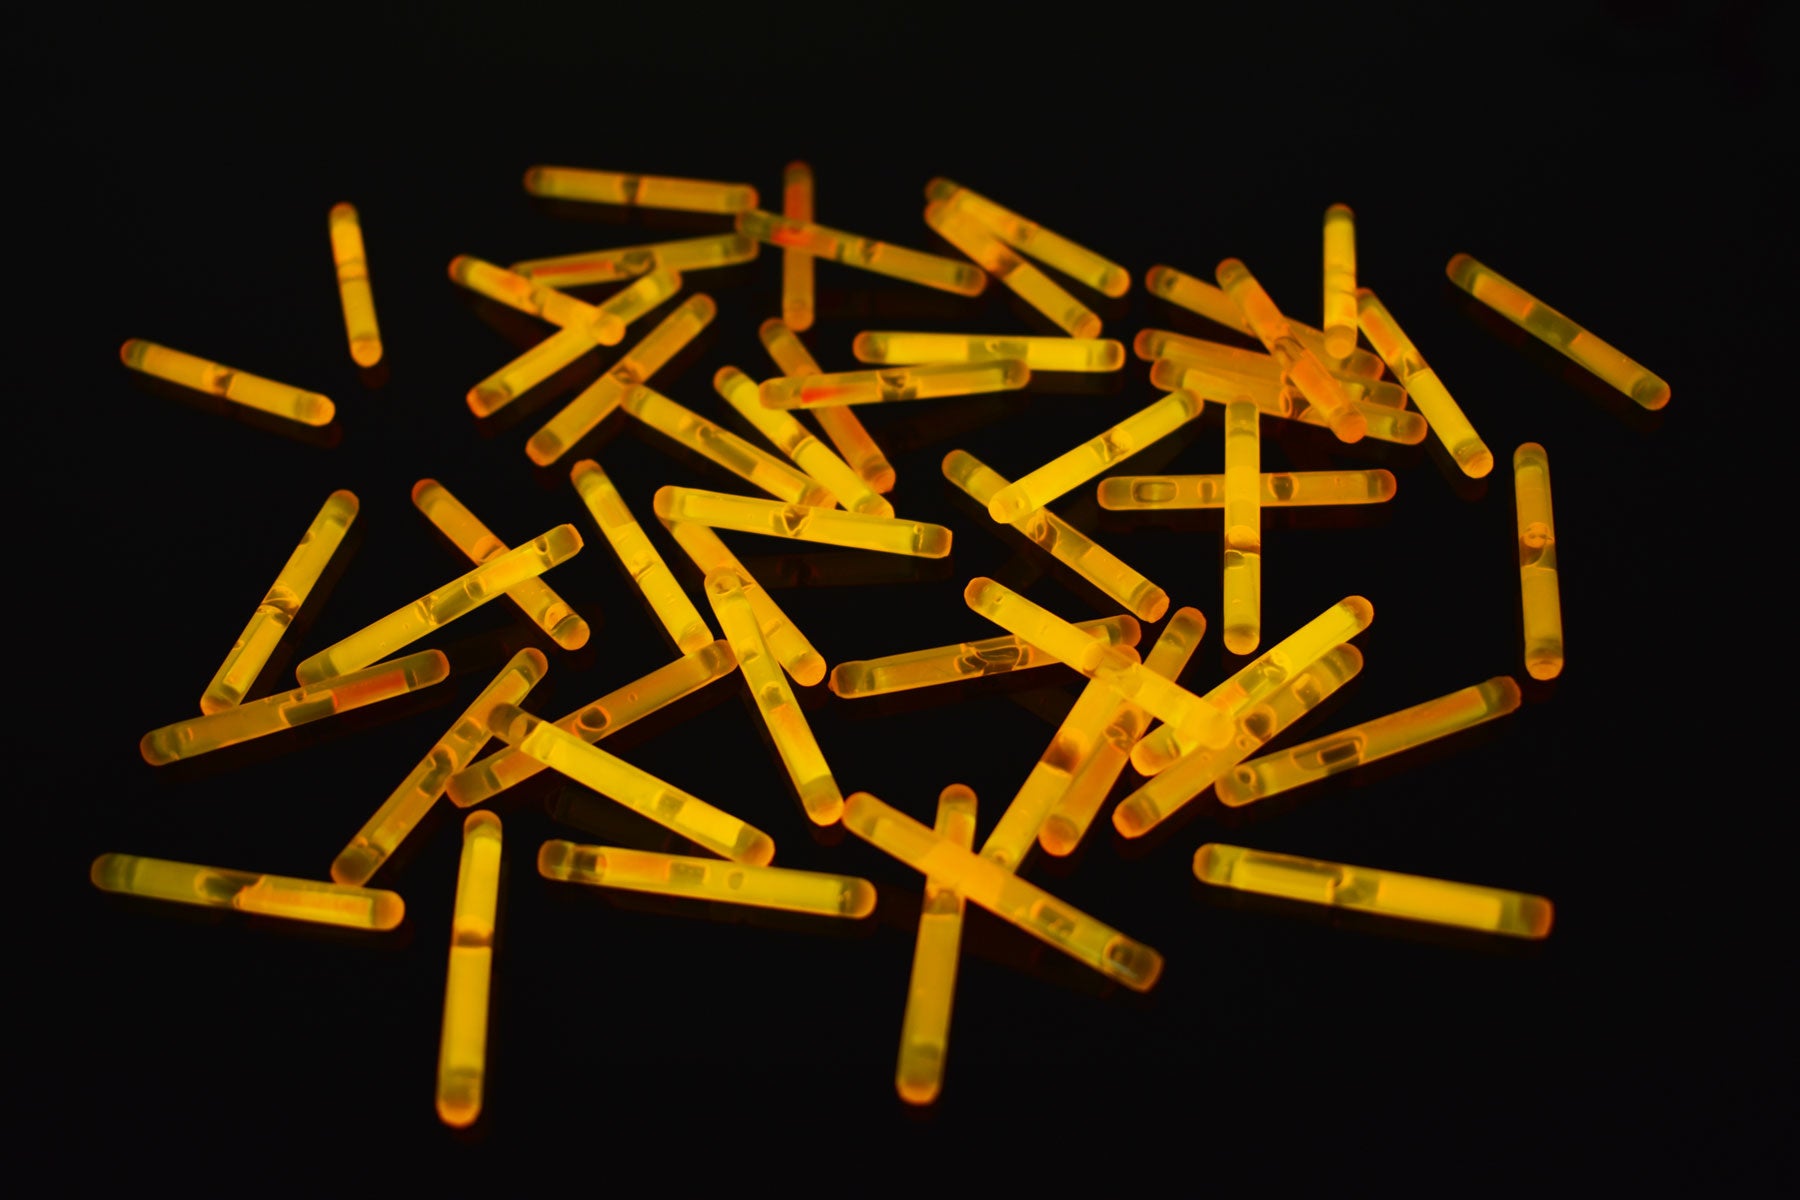 6 Inch Slim Orange Glow Sticks With Lanyards - Pack of 12